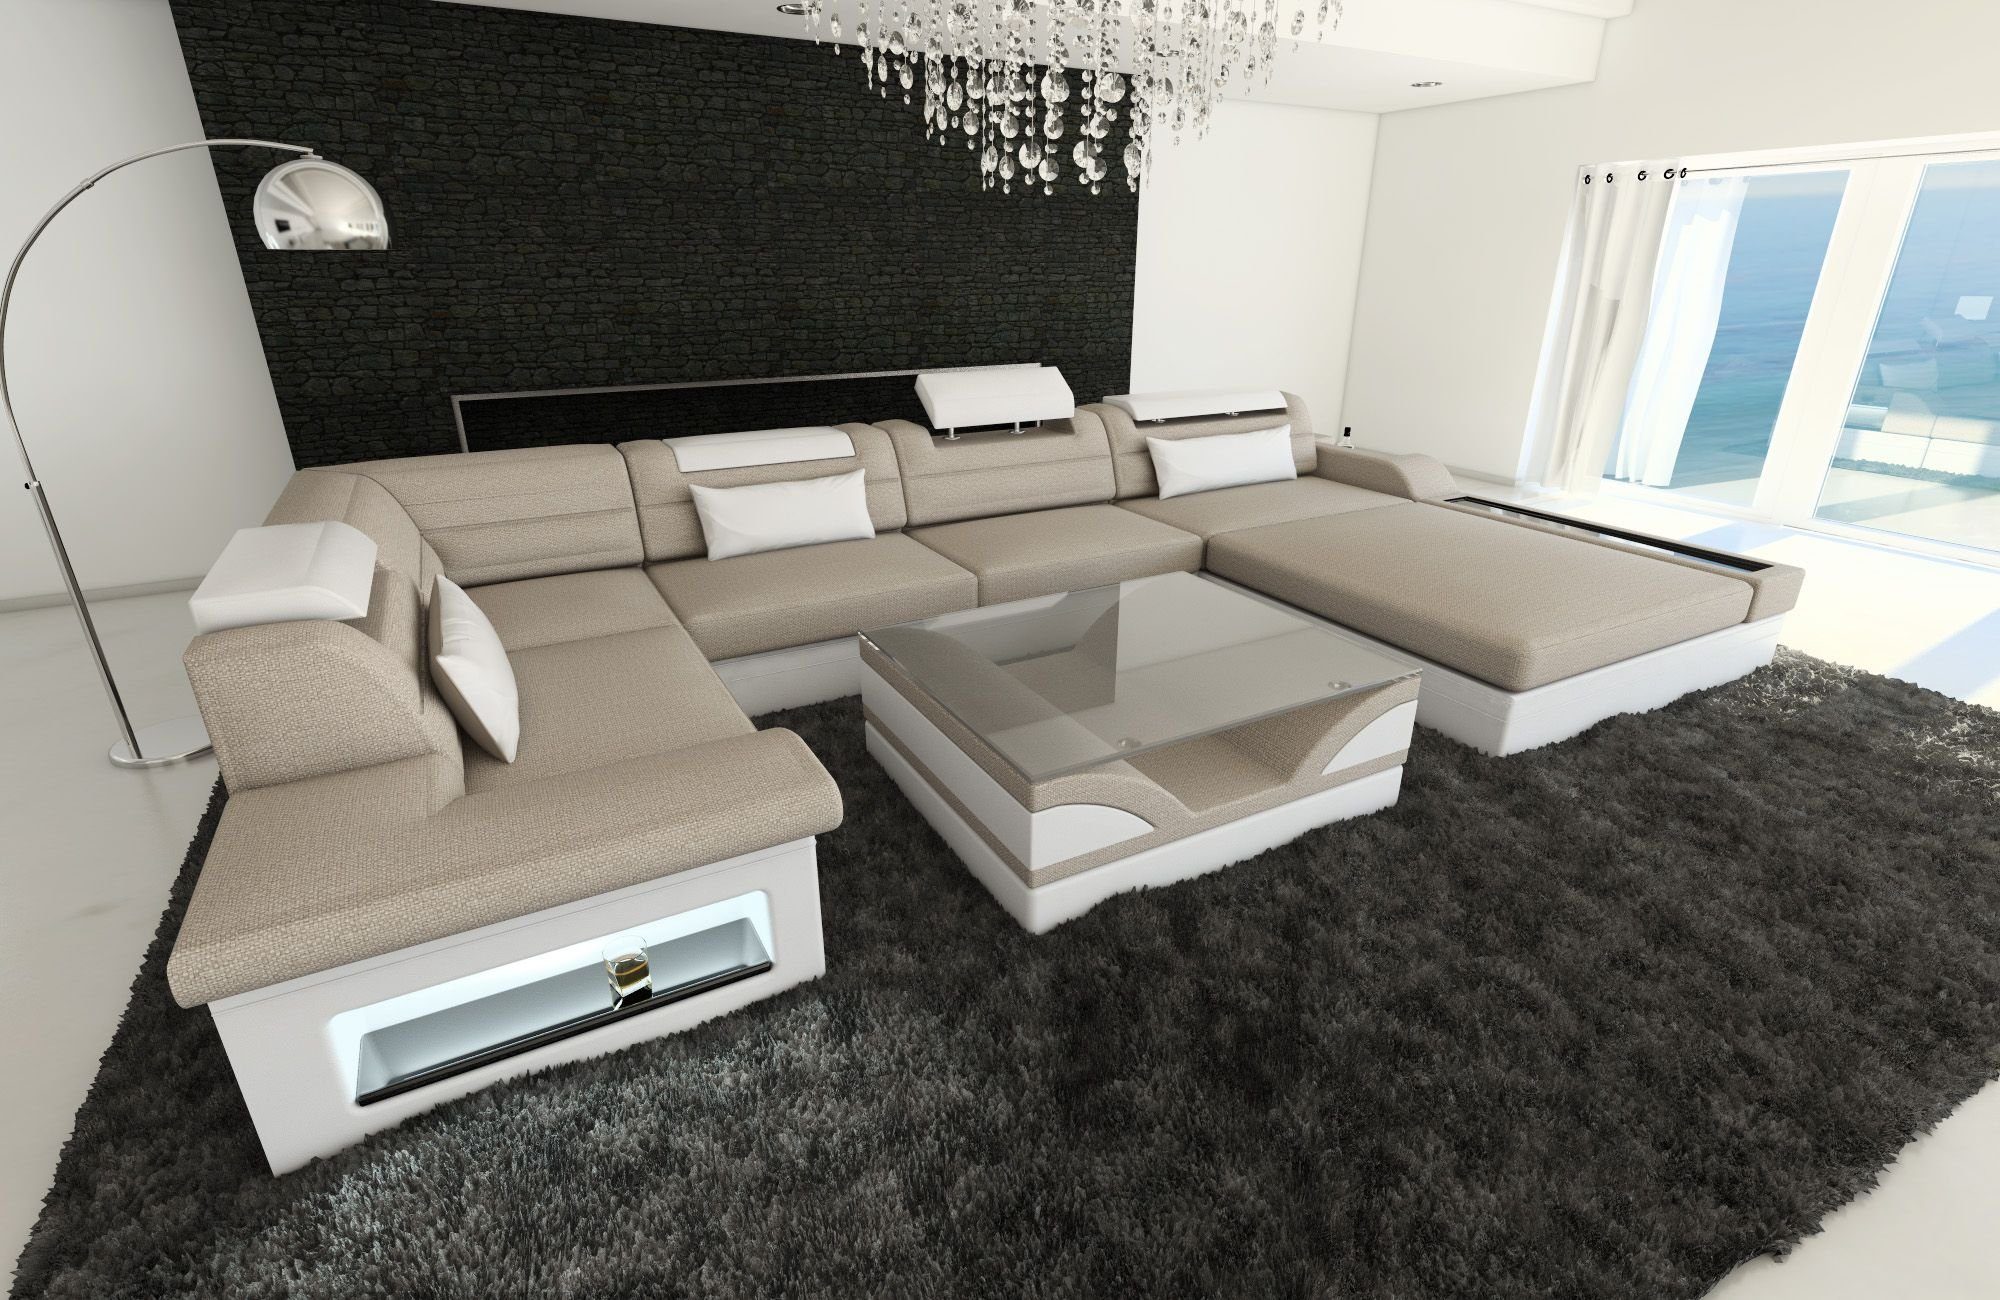 Sofa Dreams Wohnlandschaft Polster mit LED, als U Couch Form Sofa wahlweise Mezzo Bettfunktion Stoff Stoffsofa, Designersofa Schlafsofa, Warmgrau-Weiss H4 mit